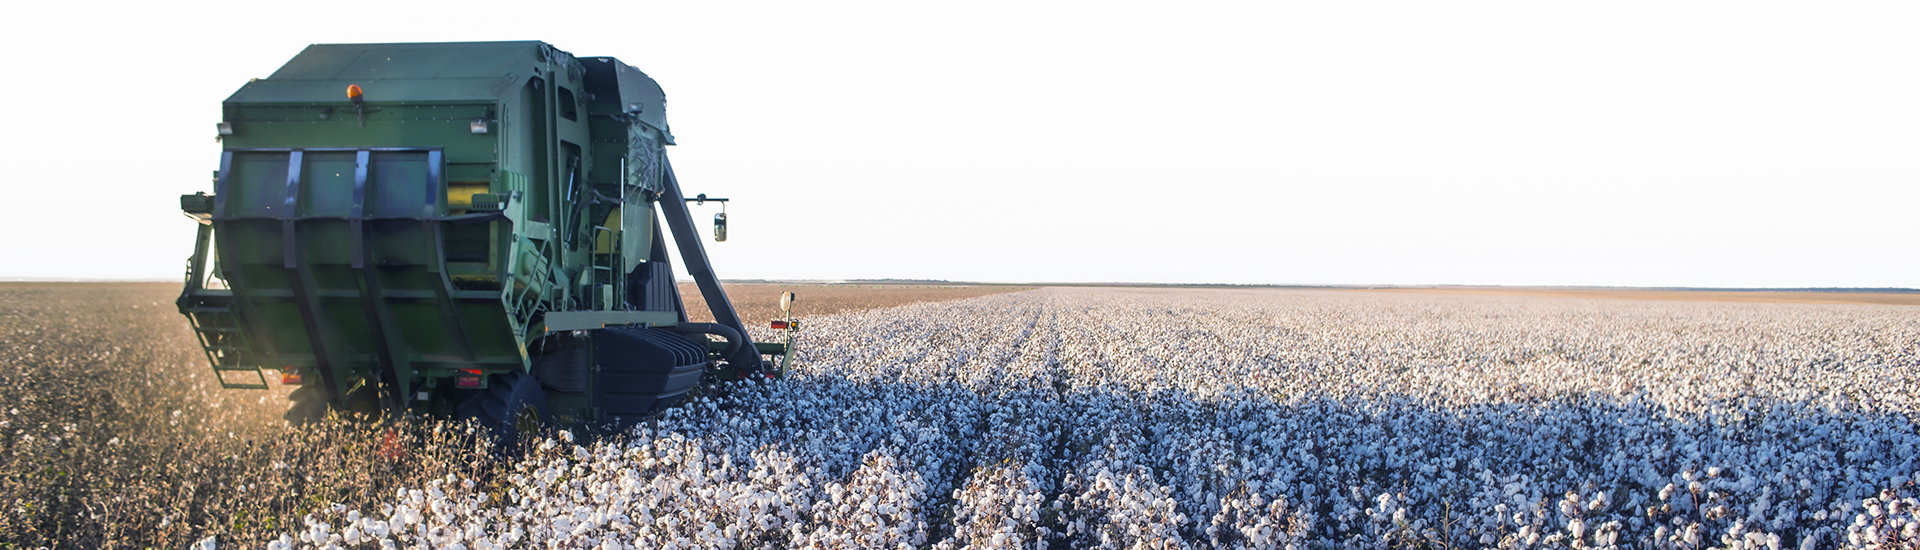 Harvesting Cotton Field